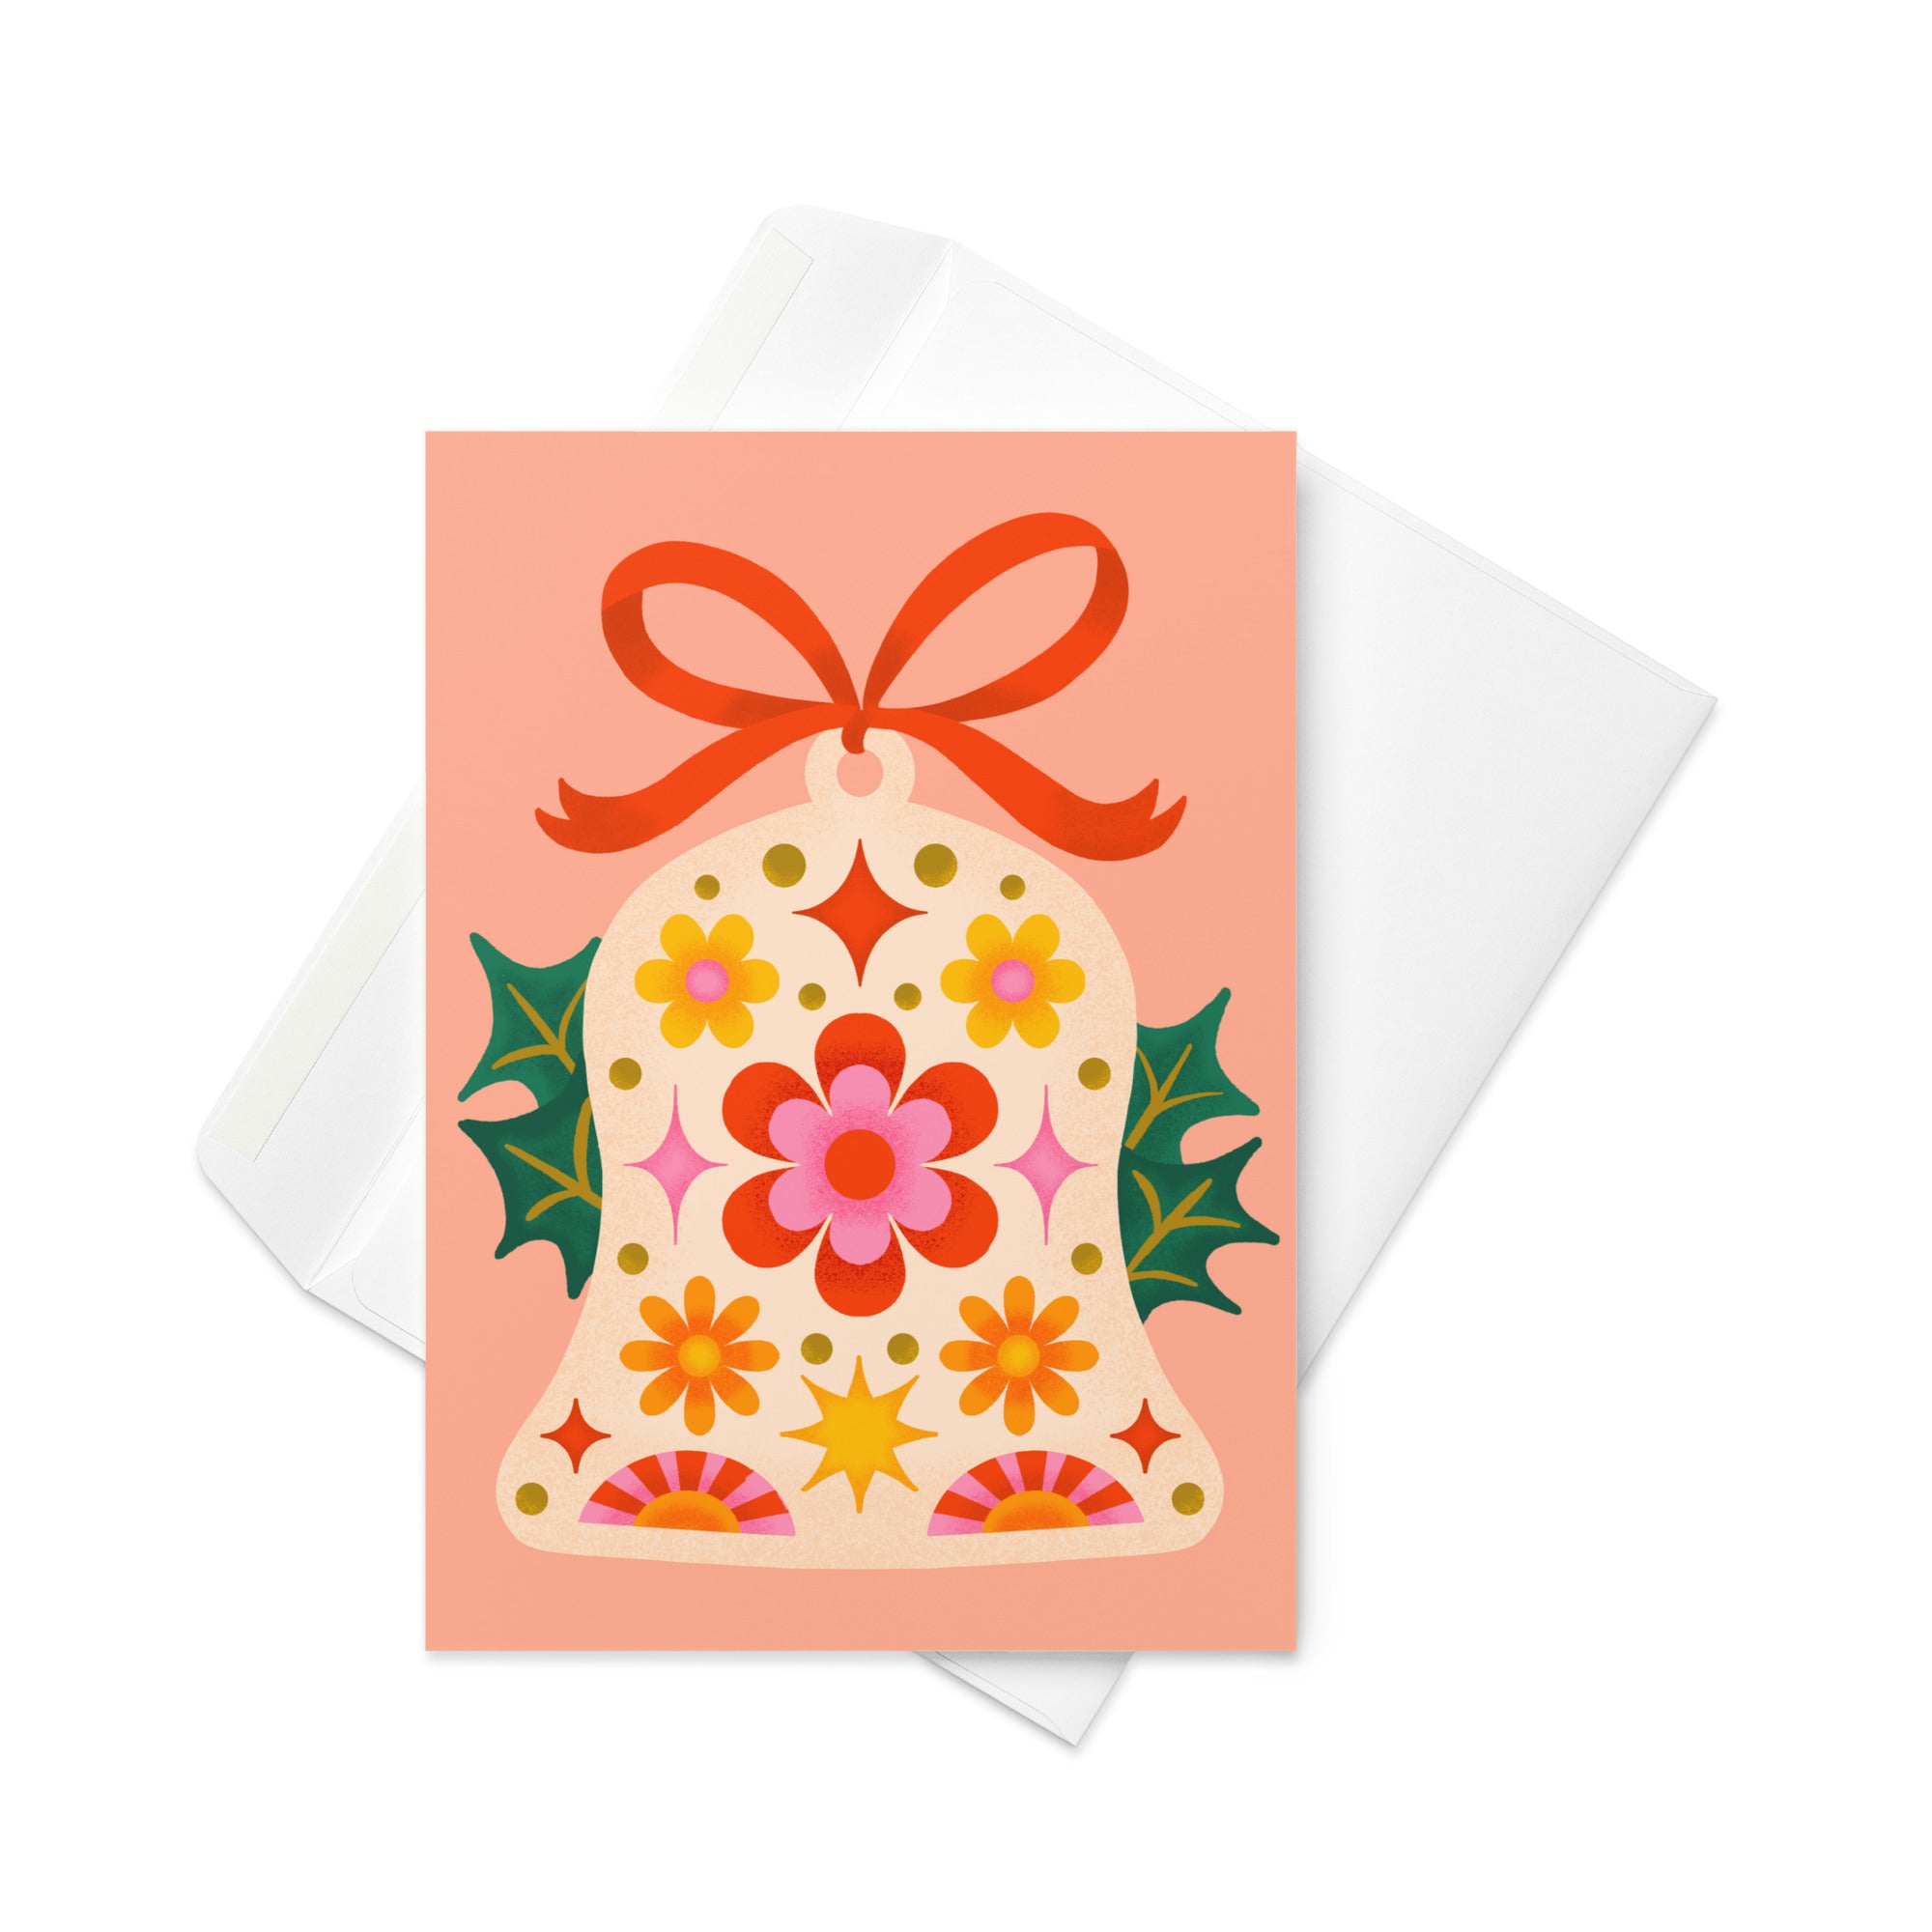 Retro Christmas Bell Greeting Card